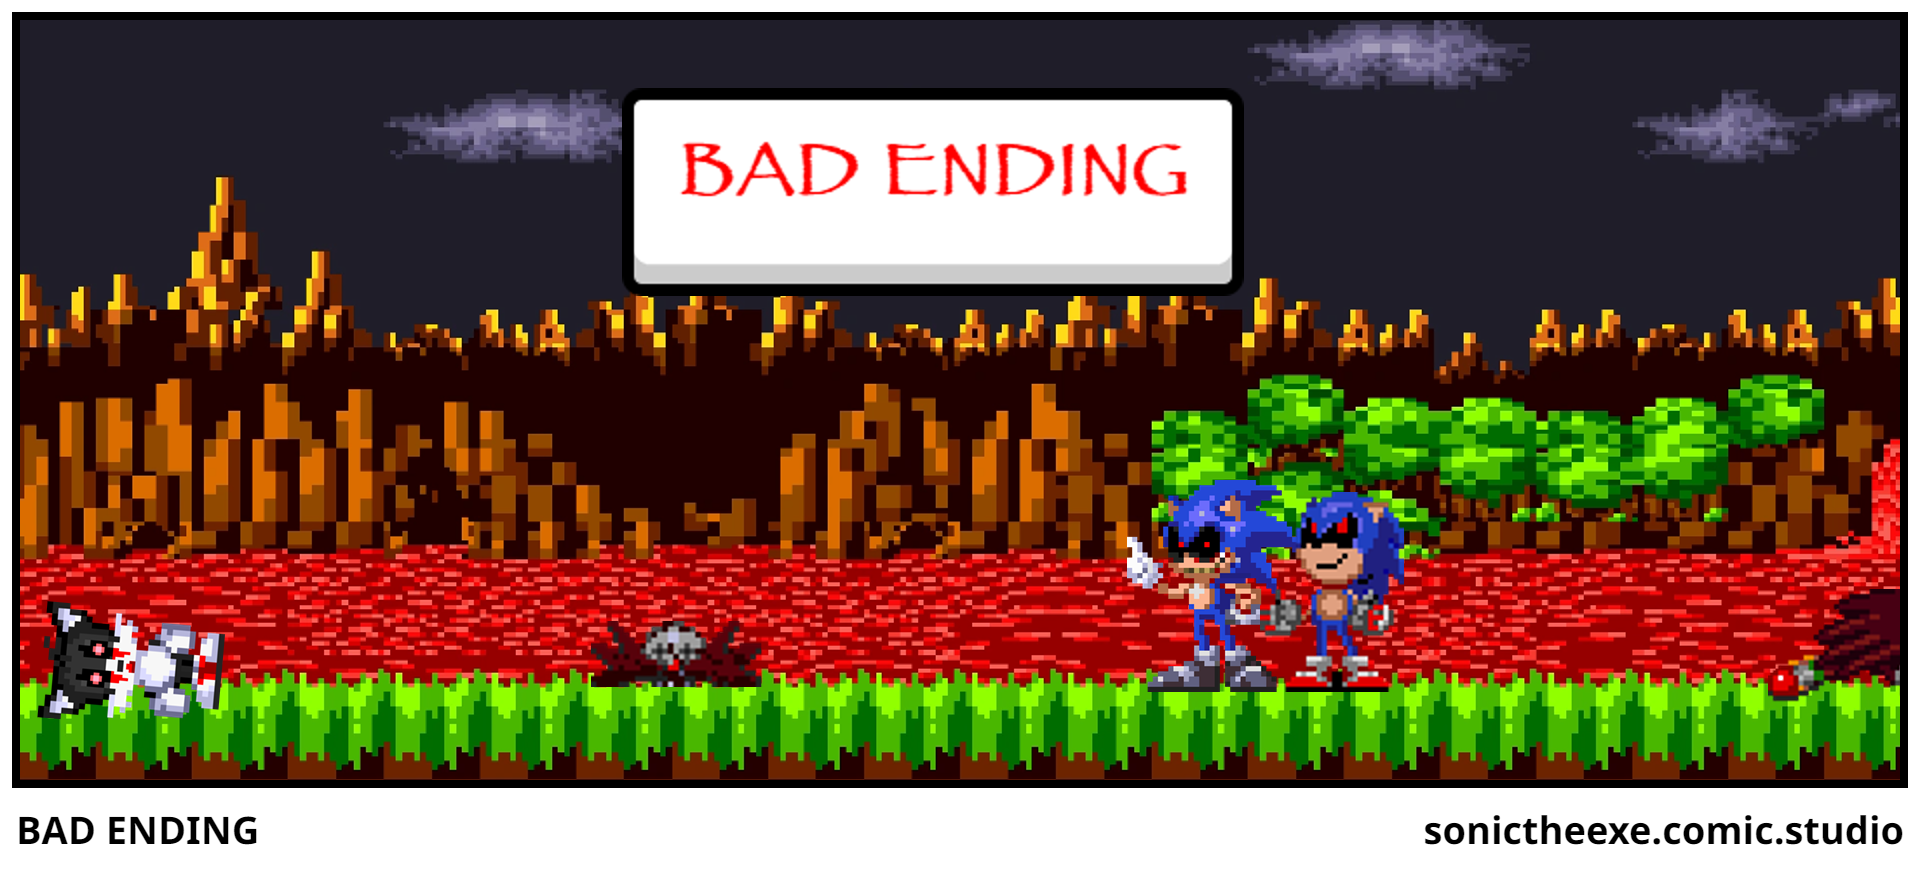 BAD ENDING